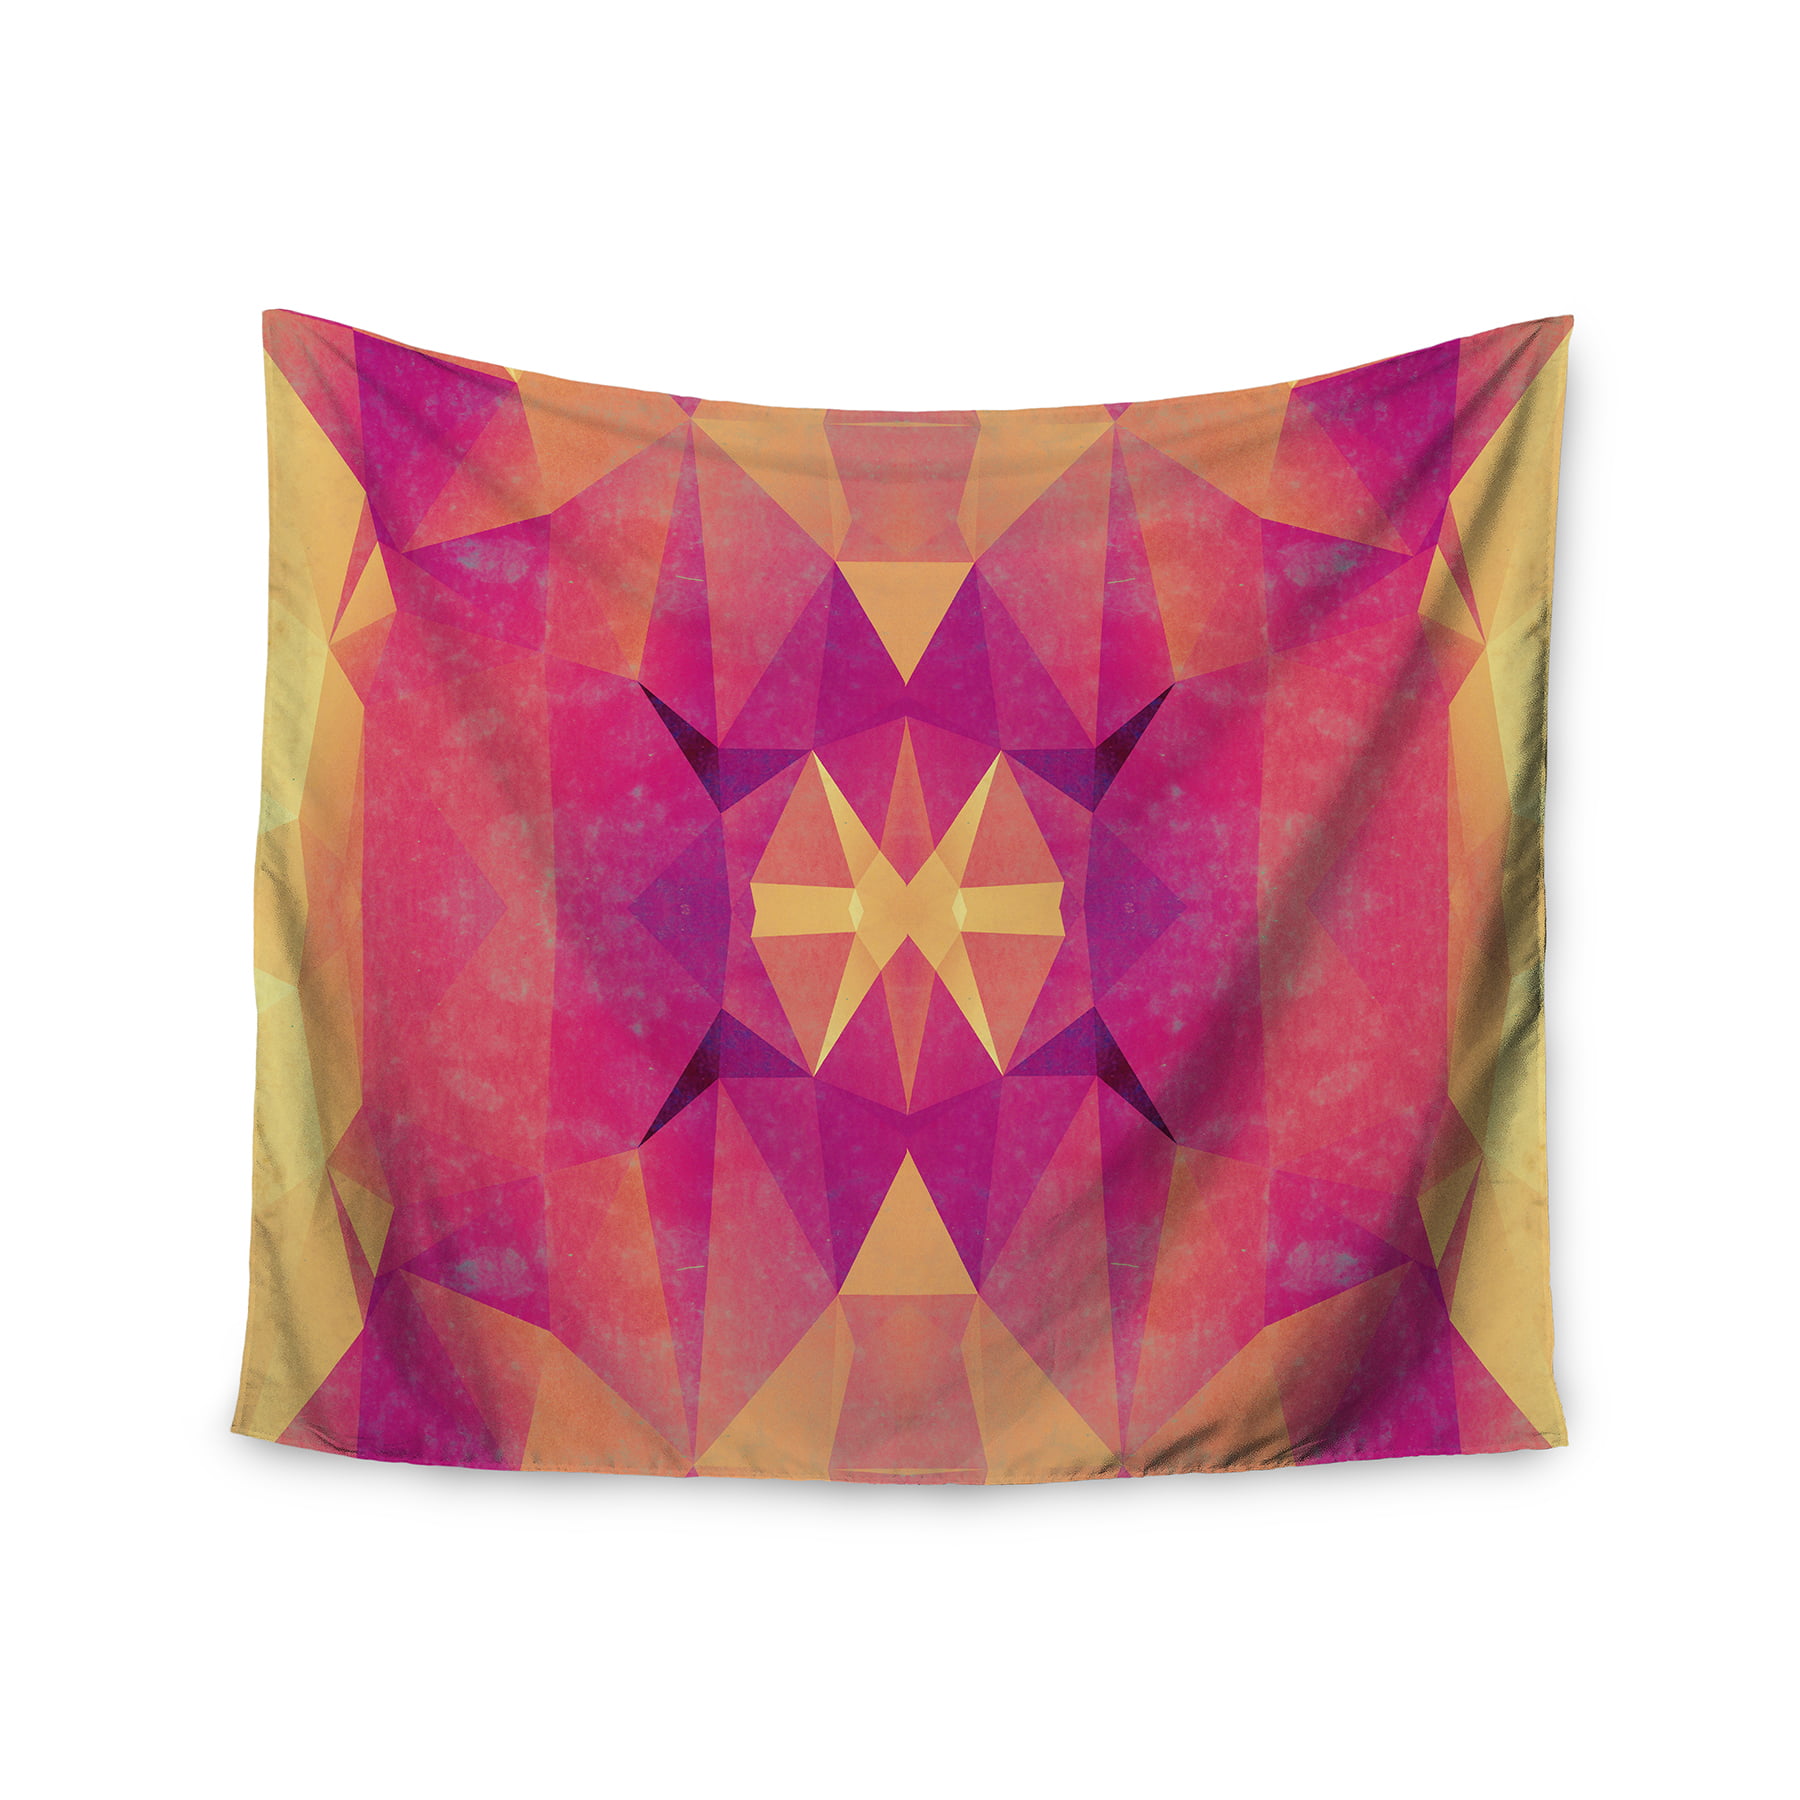 Kess InHouse Nika Martinez Boho Flower Mandala in Purple Lavender Standard Pillow Case 30 X 20 30 by 20-Inch